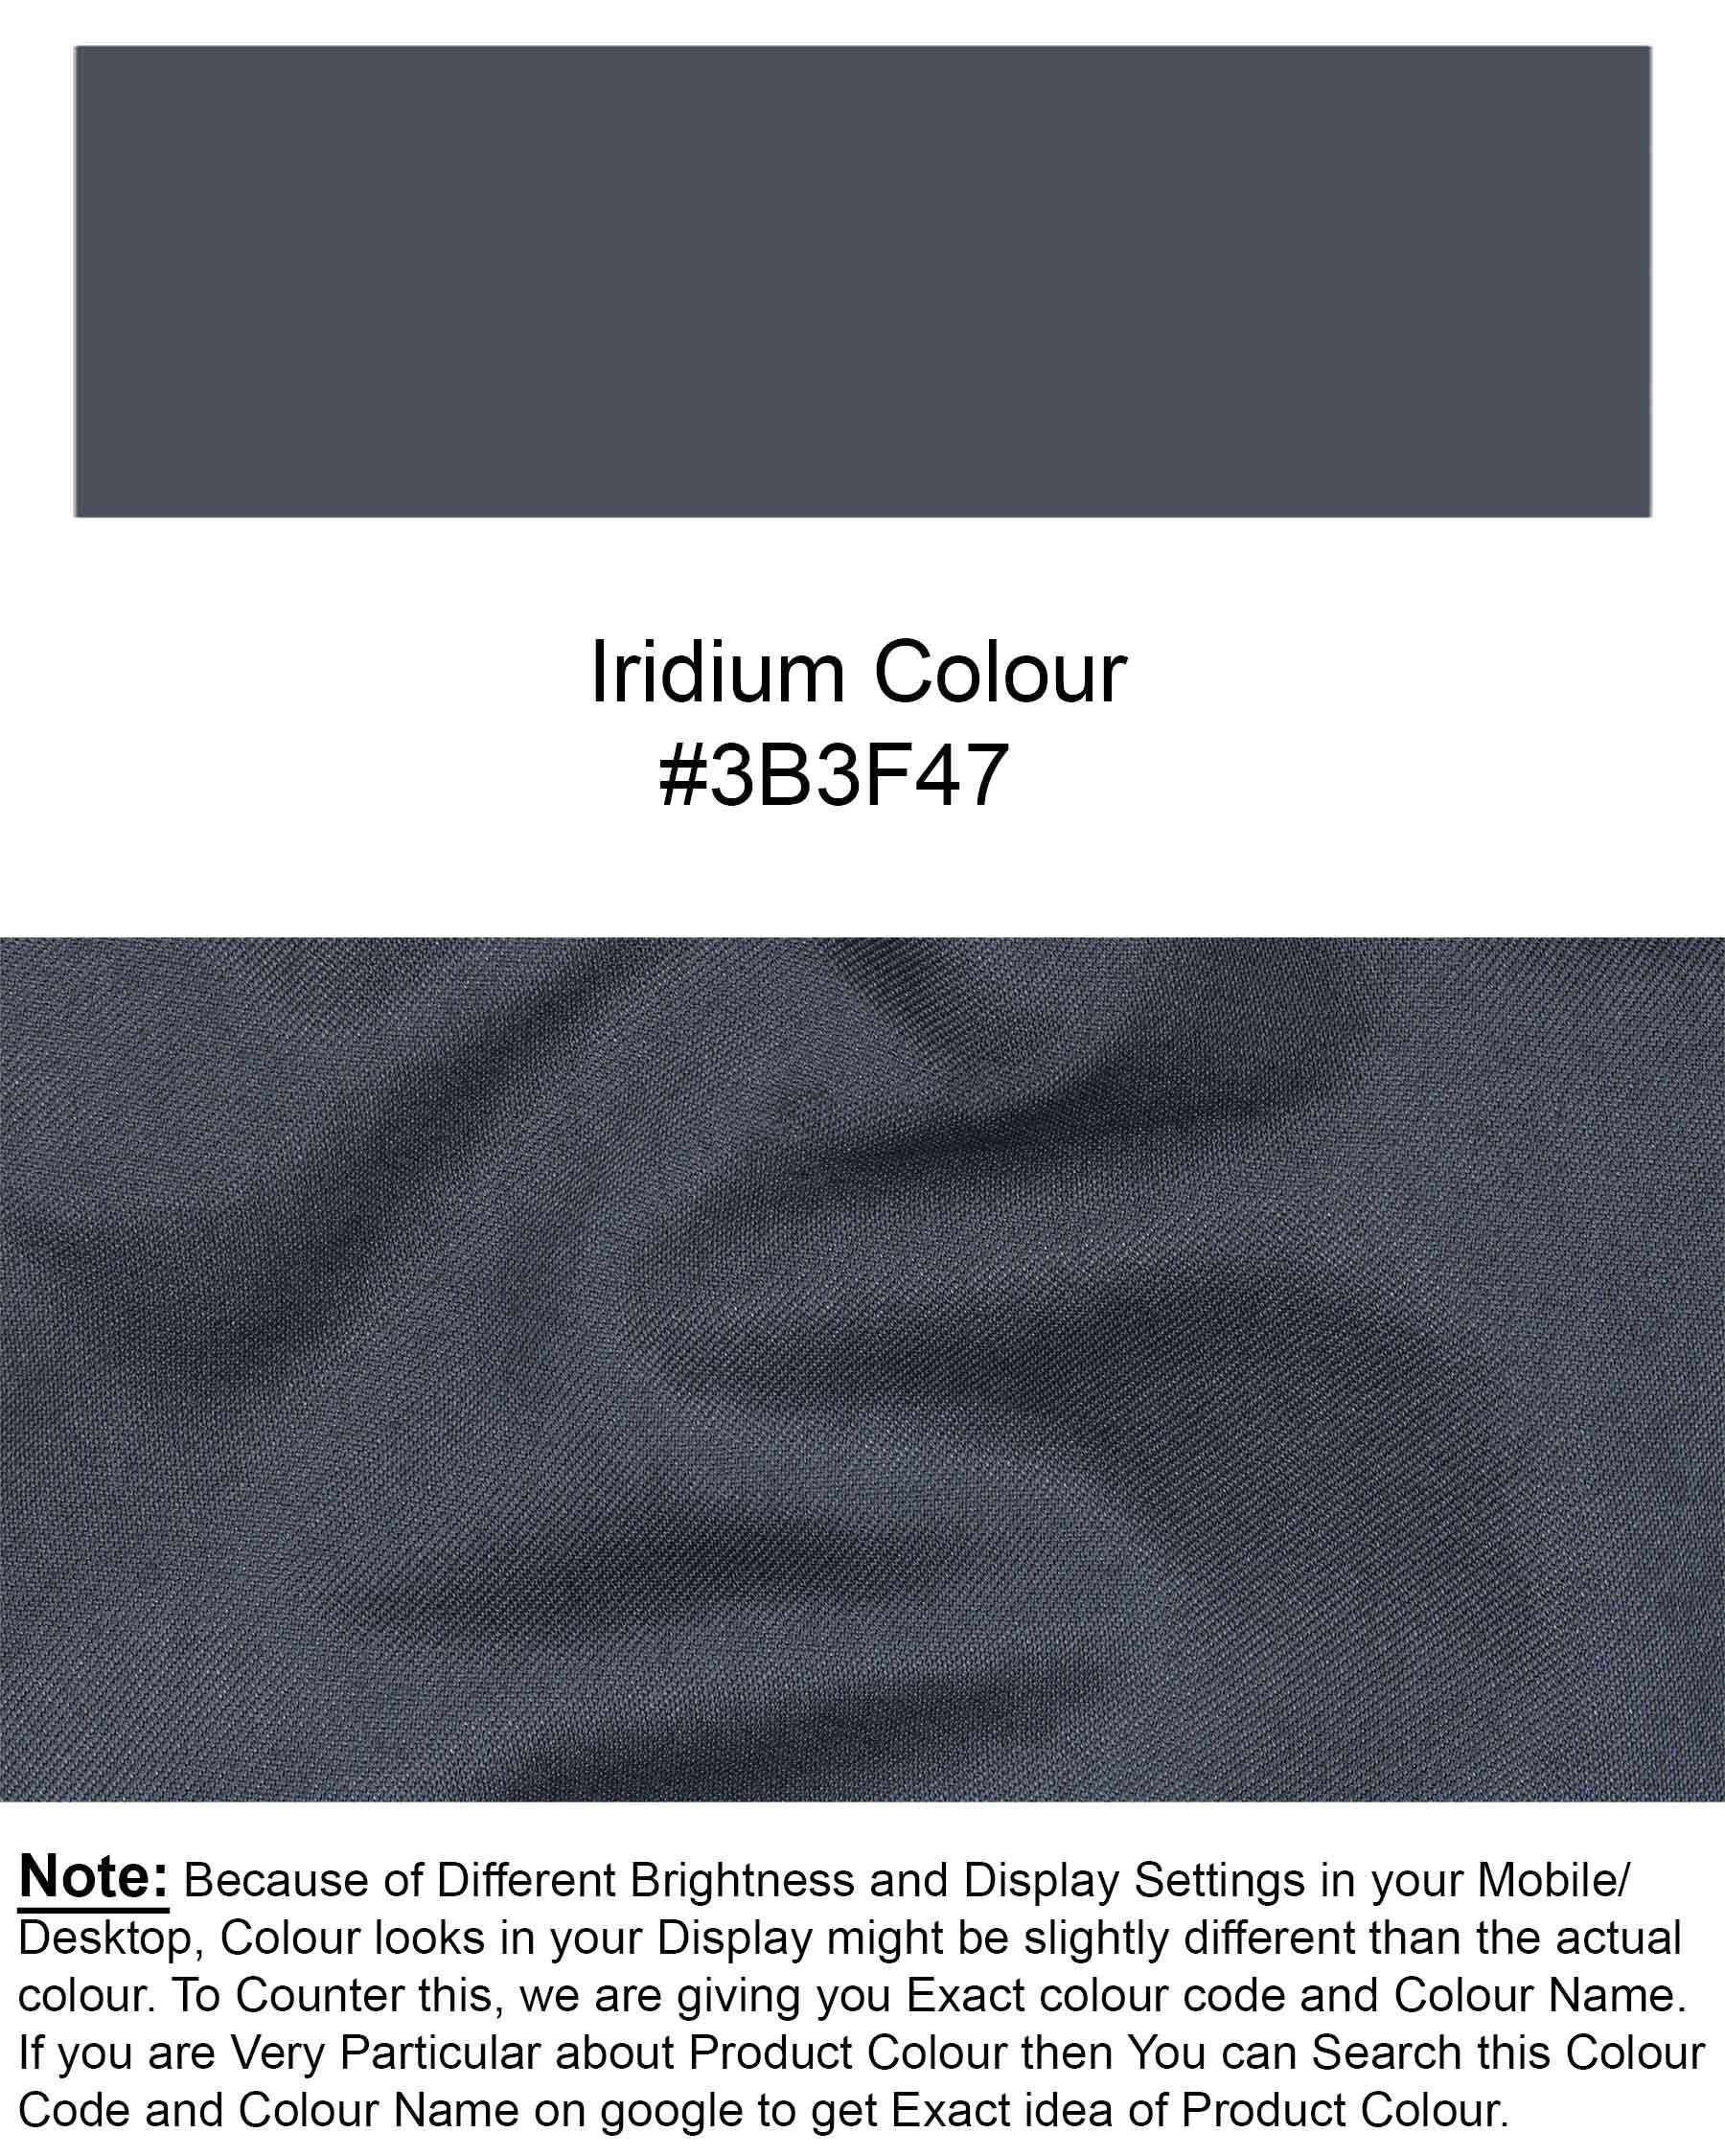 Iridium Grey Double Breasted Blazer BL1913-DB-36,BL1913-DB-38,BL1913-DB-40,BL1913-DB-42,BL1913-DB-44,BL1913-DB-46,BL1913-DB-48,BL1913-DB-50,BL1913-DB-52,BL1913-DB-54,BL1913-DB-56,BL1913-DB-58,BL1913-DB-60